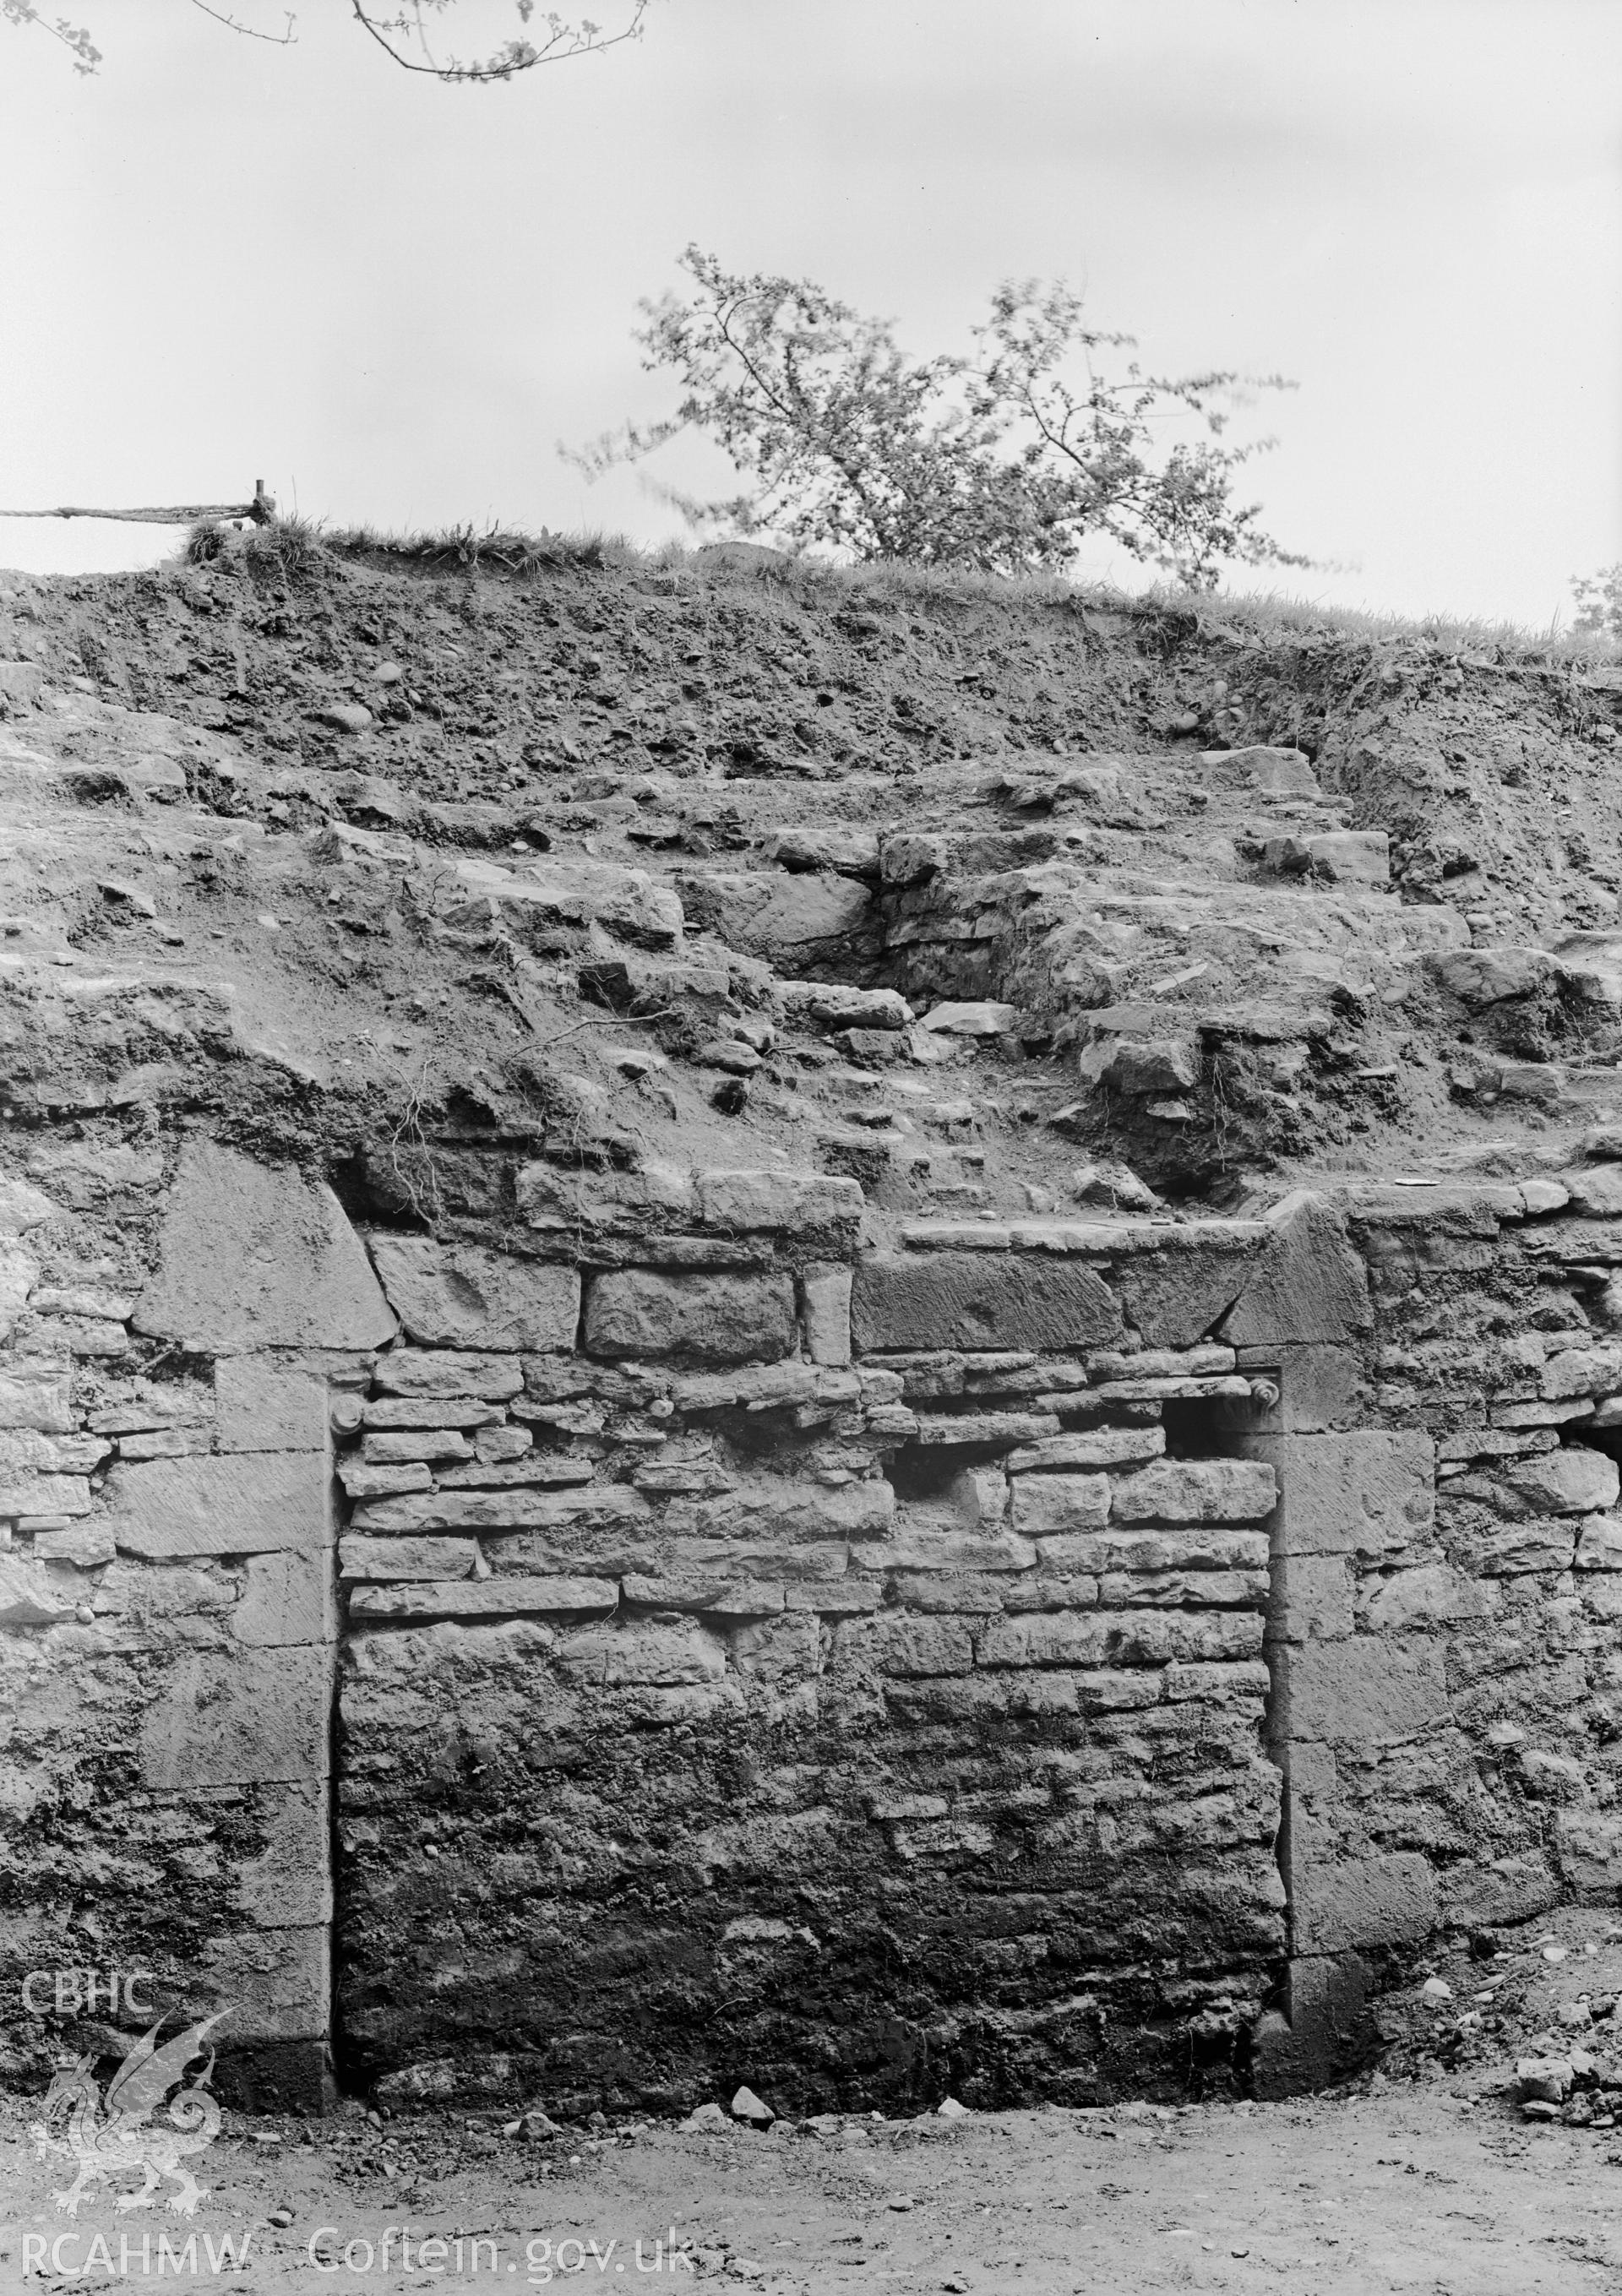 D.O.E photograph of Skenfrith Castle. Excavations.